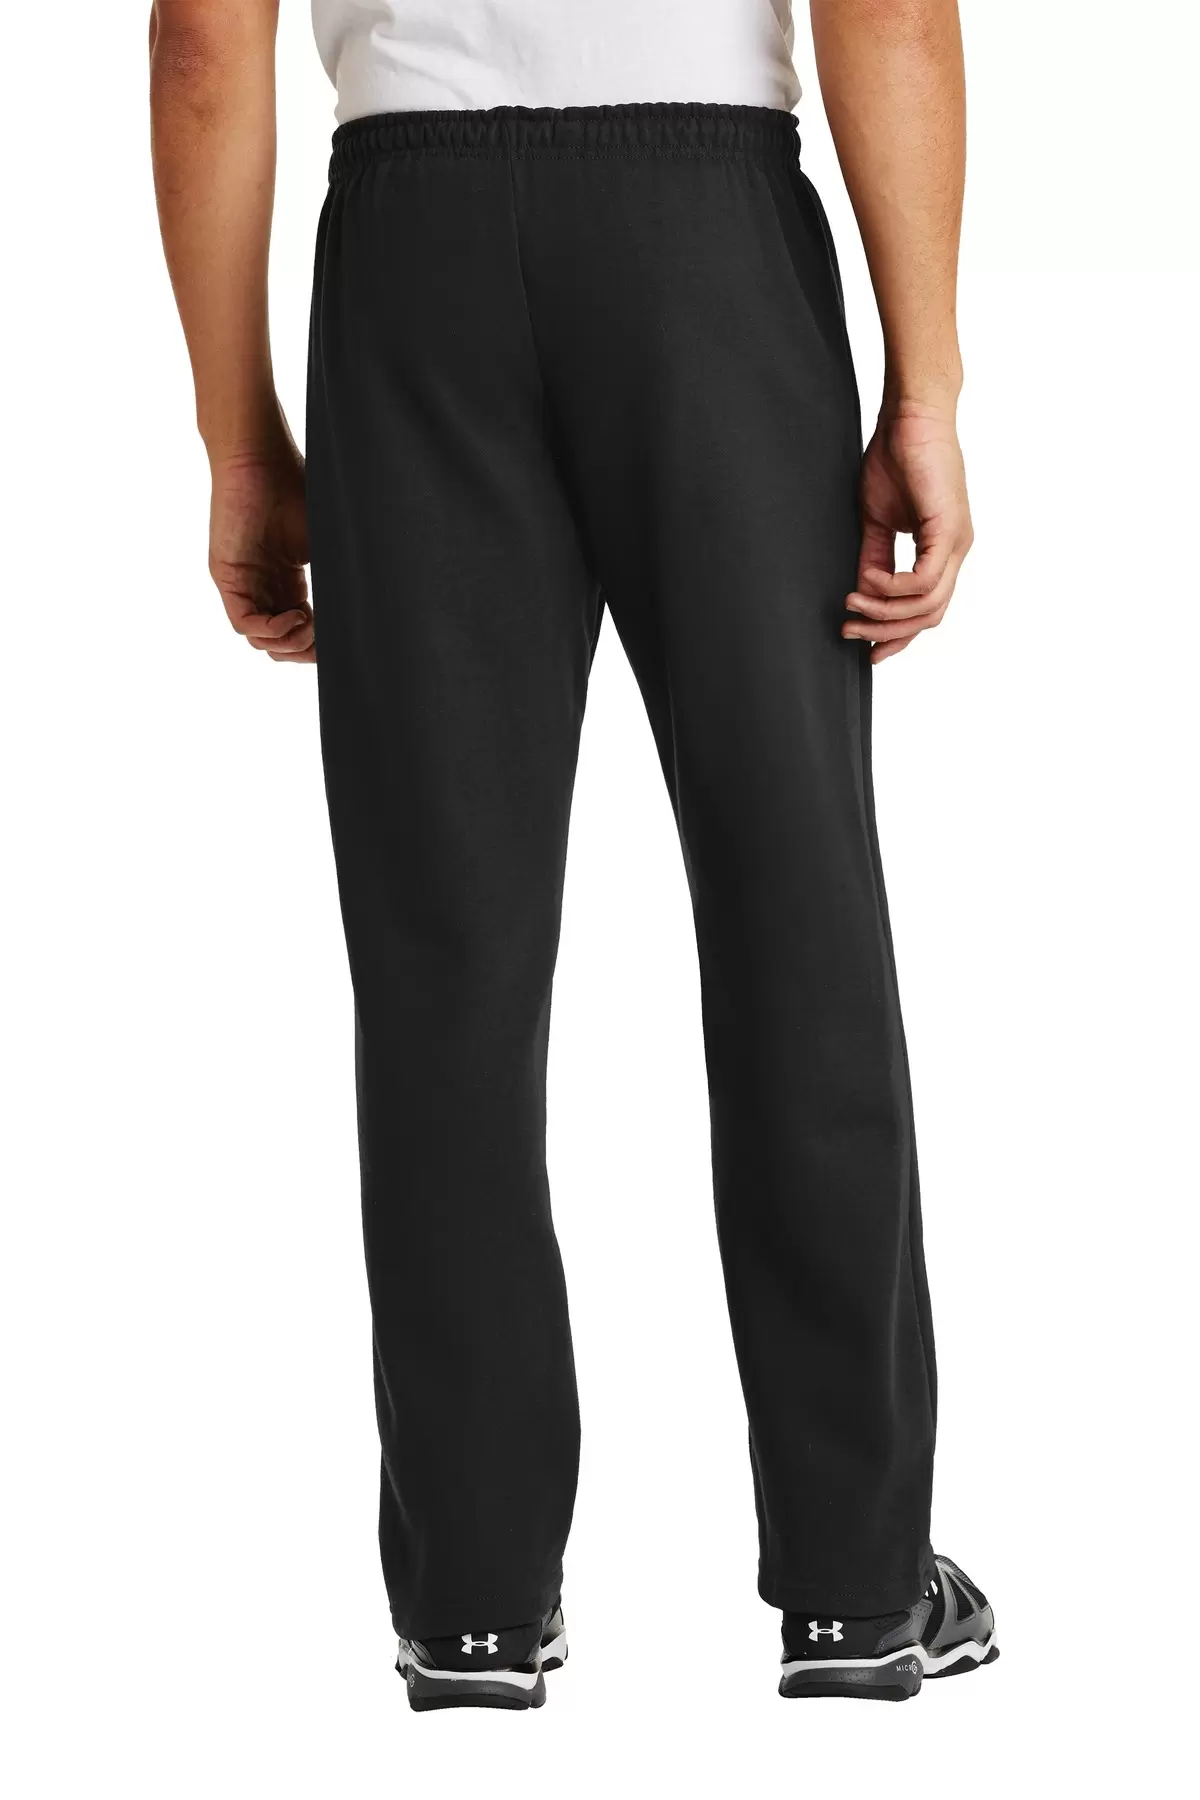 Gildan G184 7.75 oz. 50/50 Open-Bottom Sweatpants Black - From $13.29